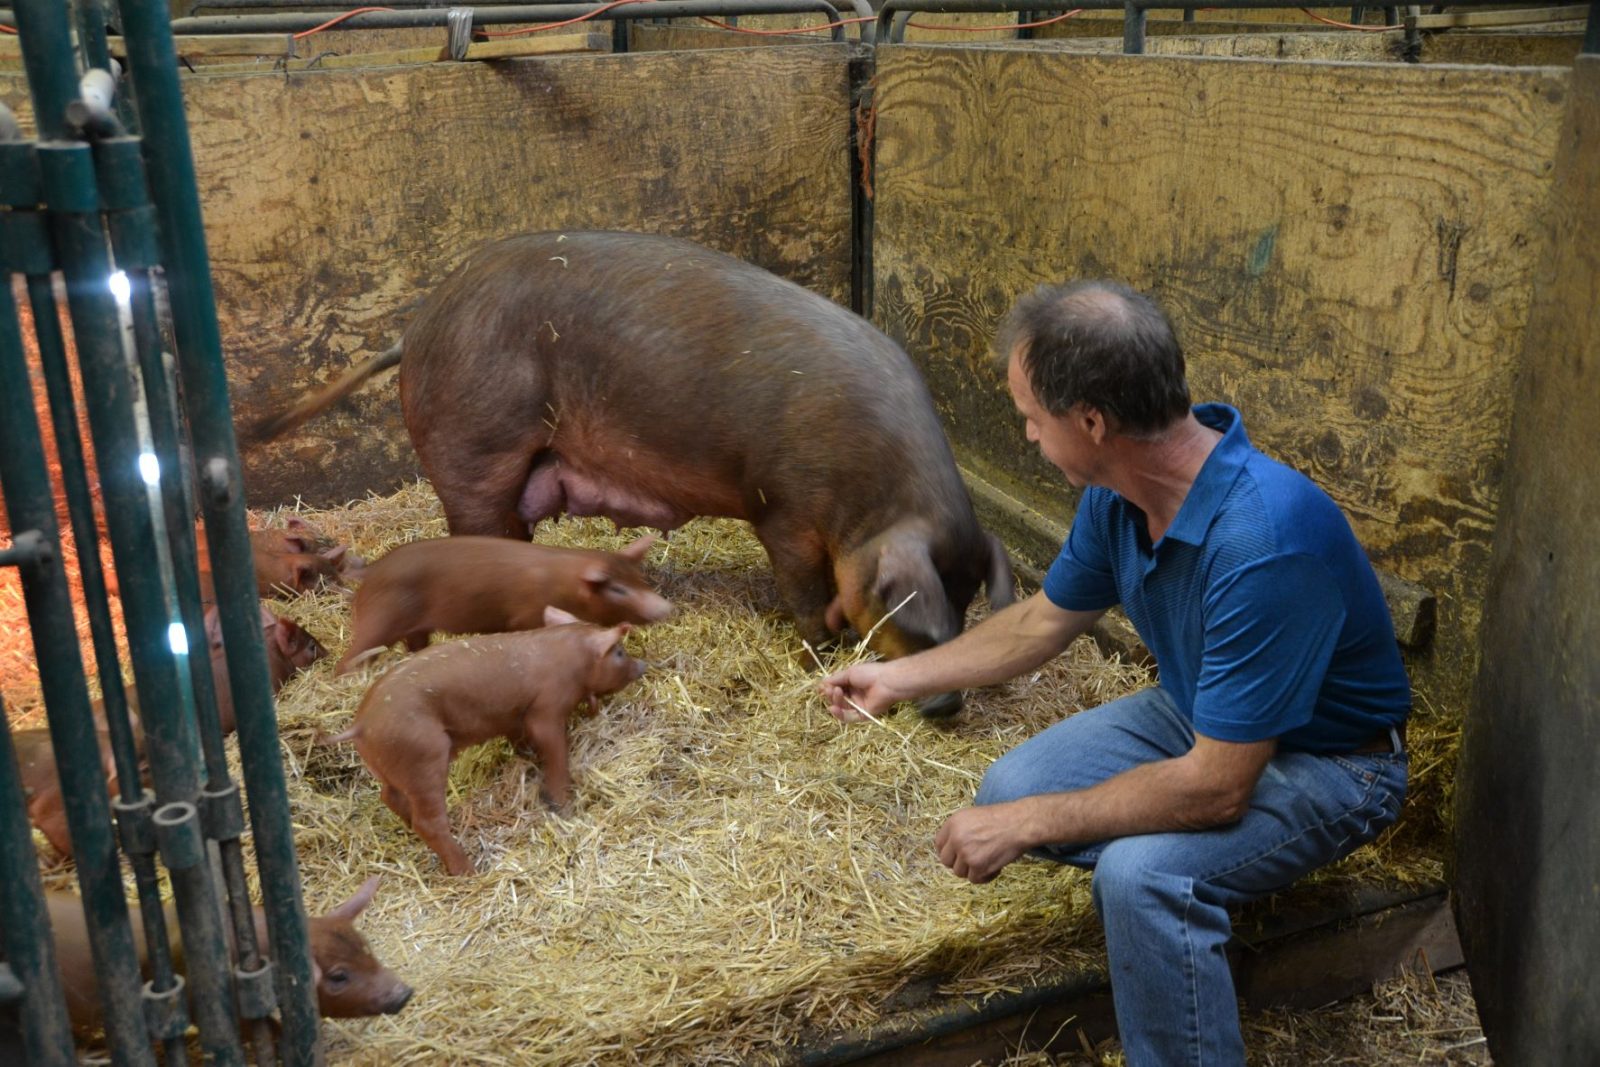 Vankleek Hill farmer has to shut down his wild boar operation